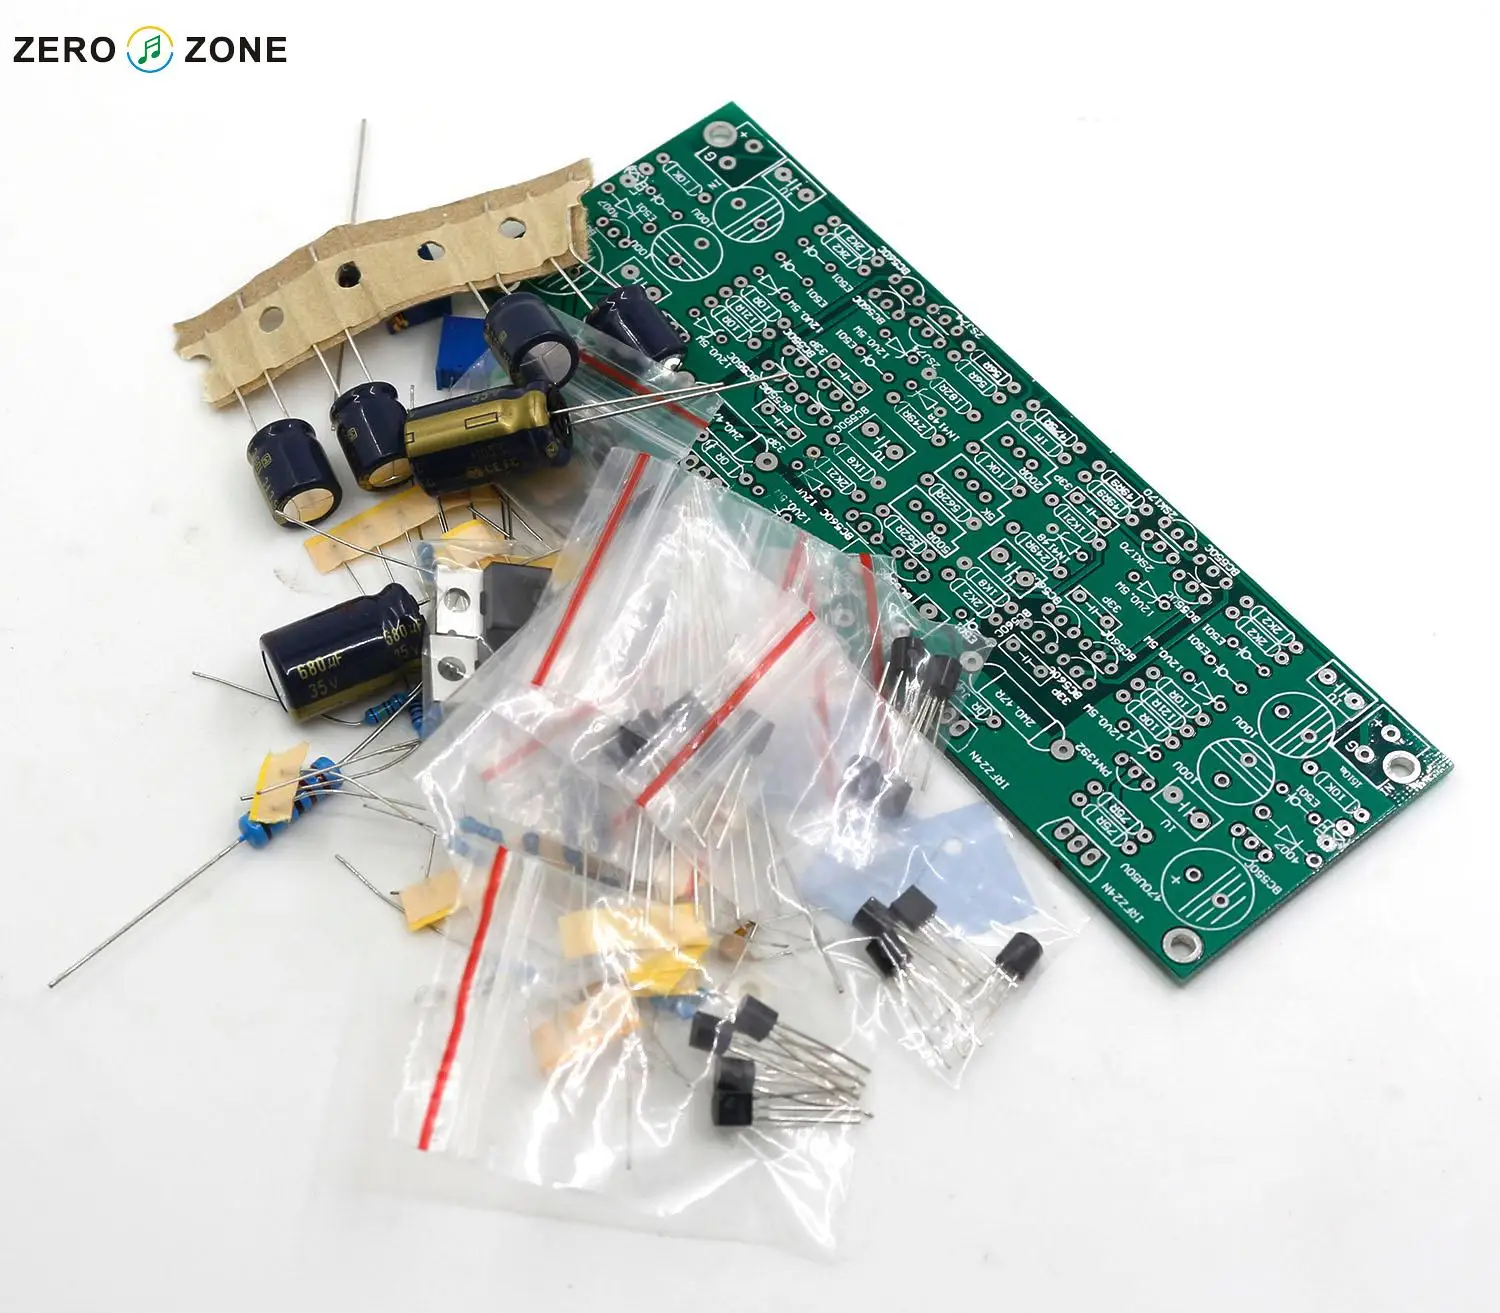 

B22 (reference Beta 22 β22 circuit) HI-END reference level amp kit